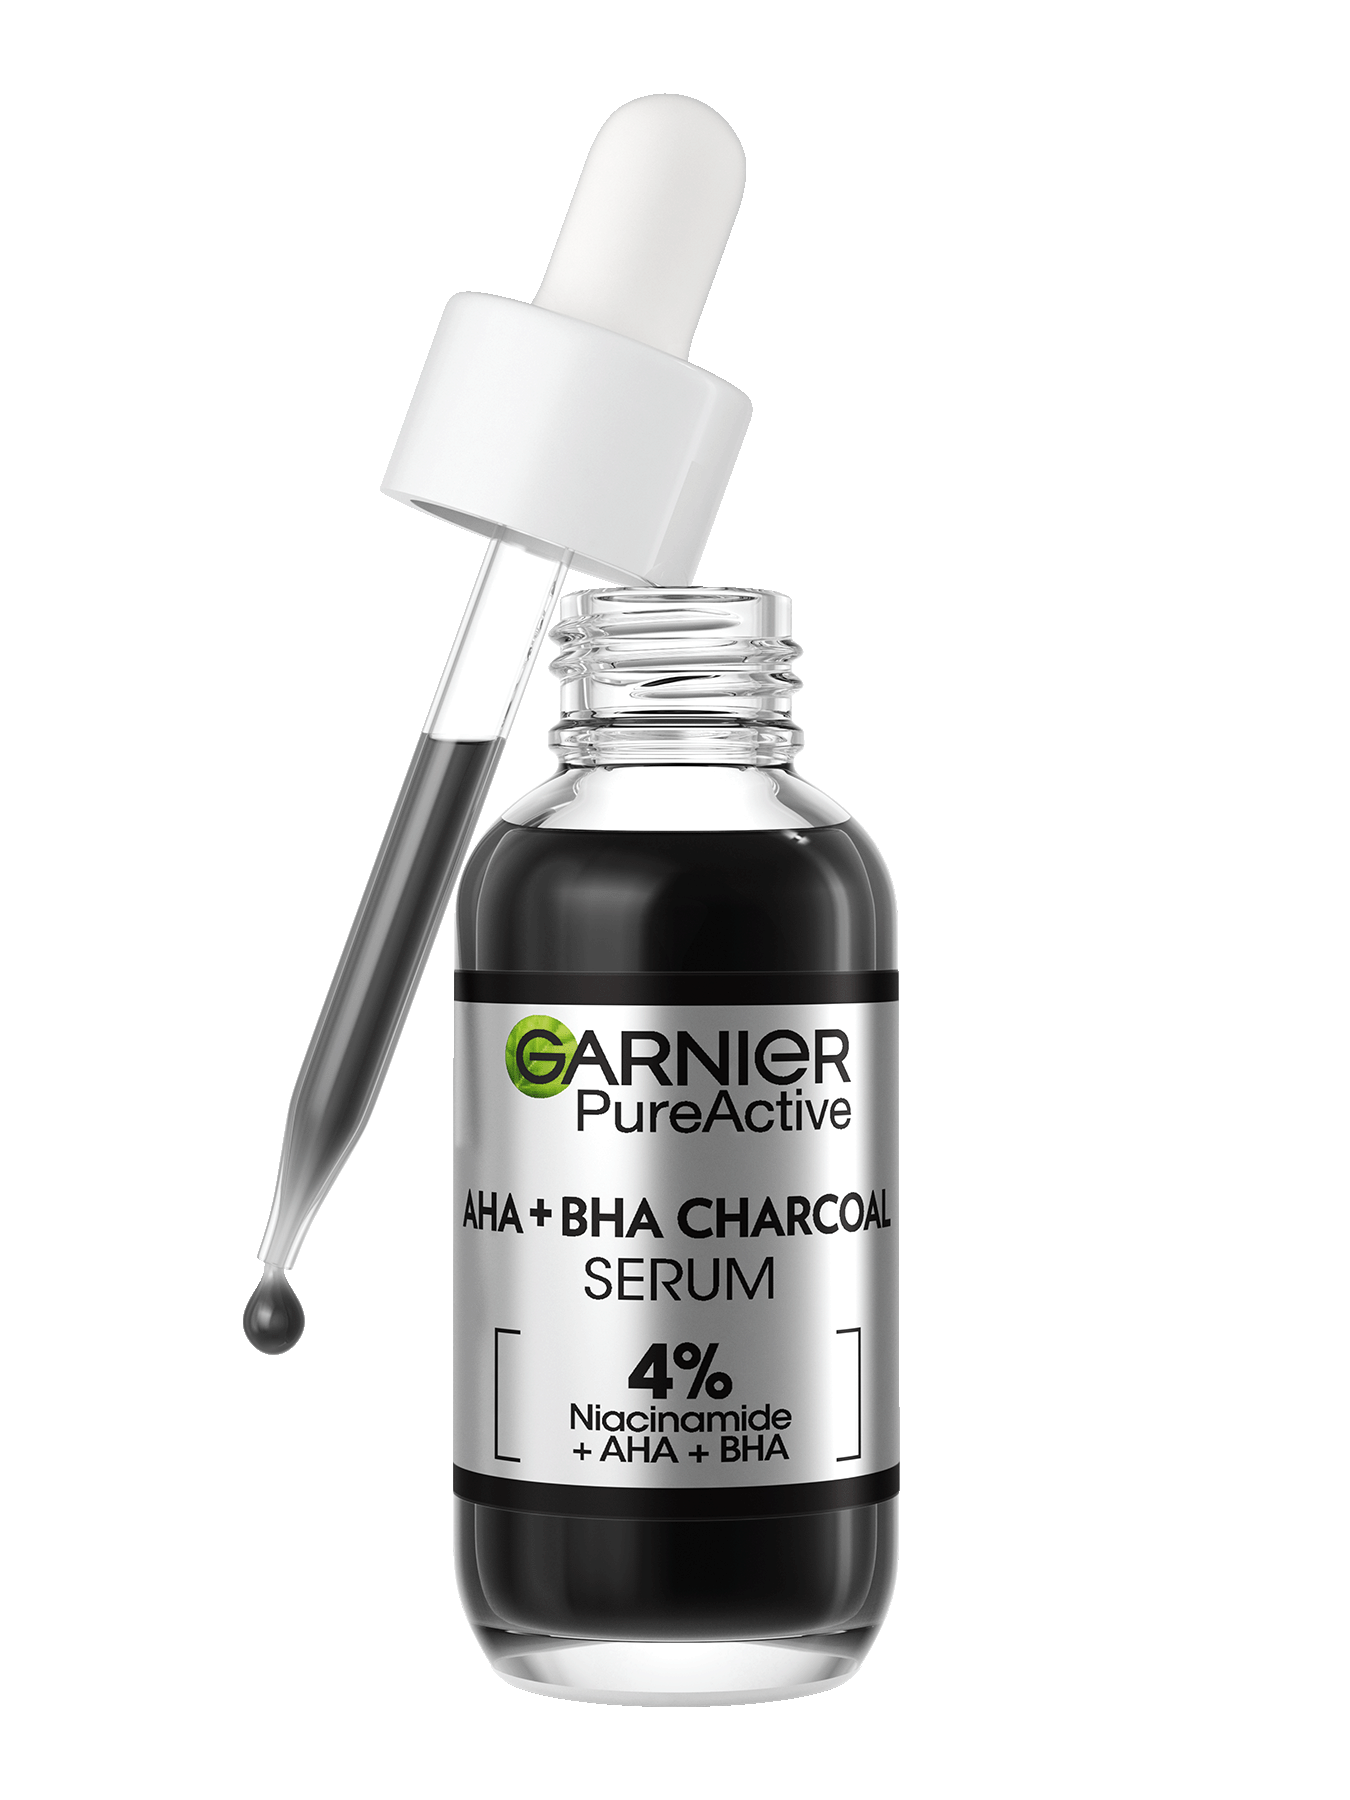 Garnier Pure Active Charcoal Serum